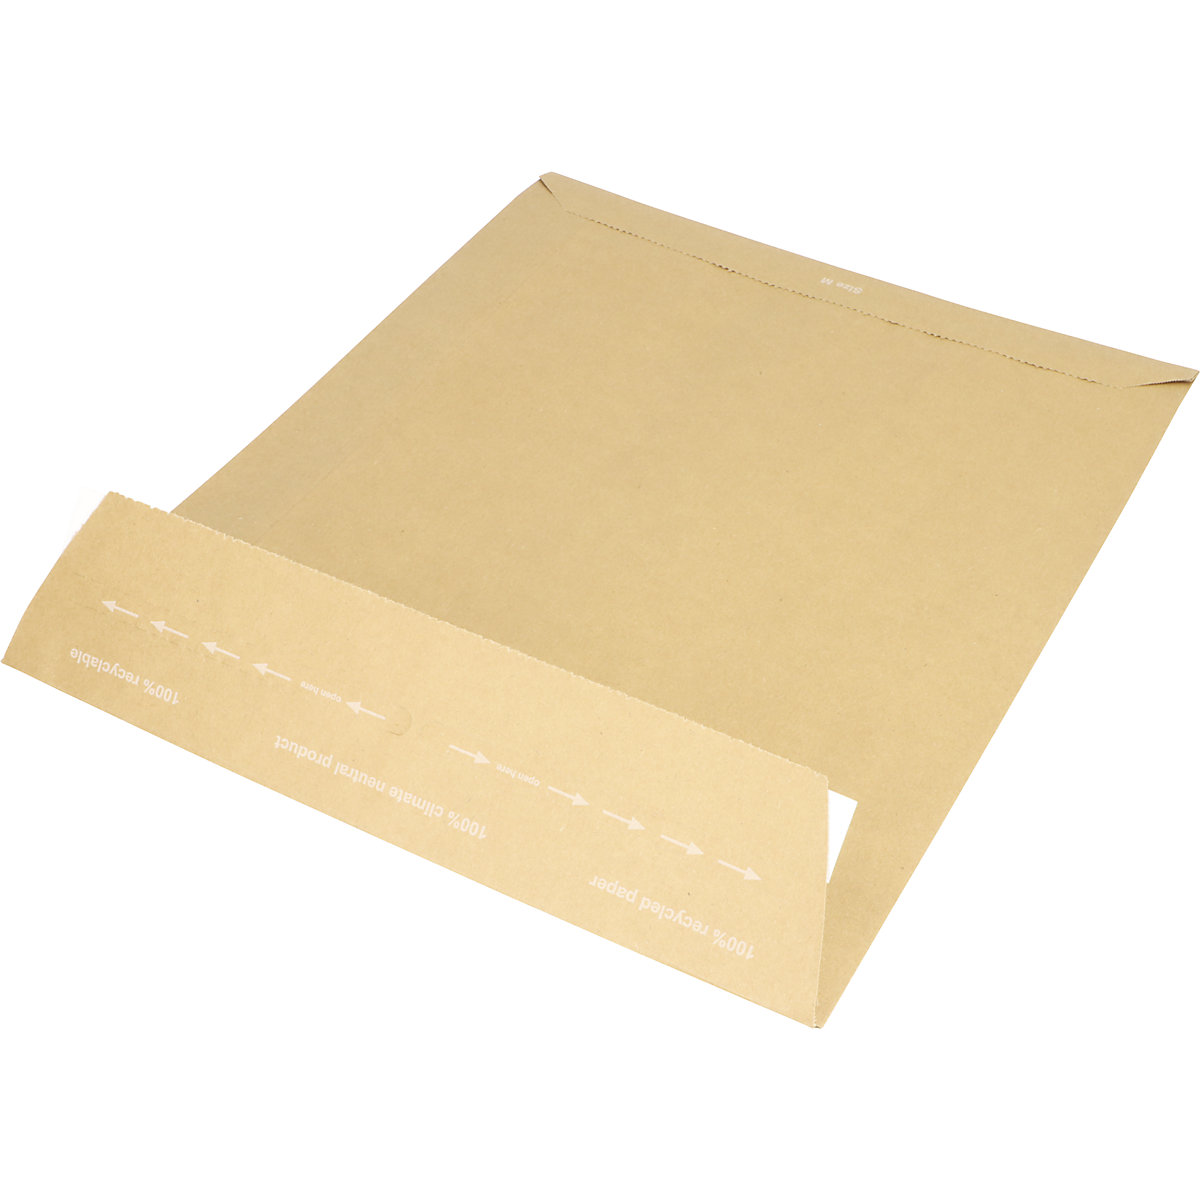 Versandtasche aus Papier E-Commerce terra, retourengeeignet, LxB 420 x 340 mm, VE 200 Stk, ab 10 VE-3